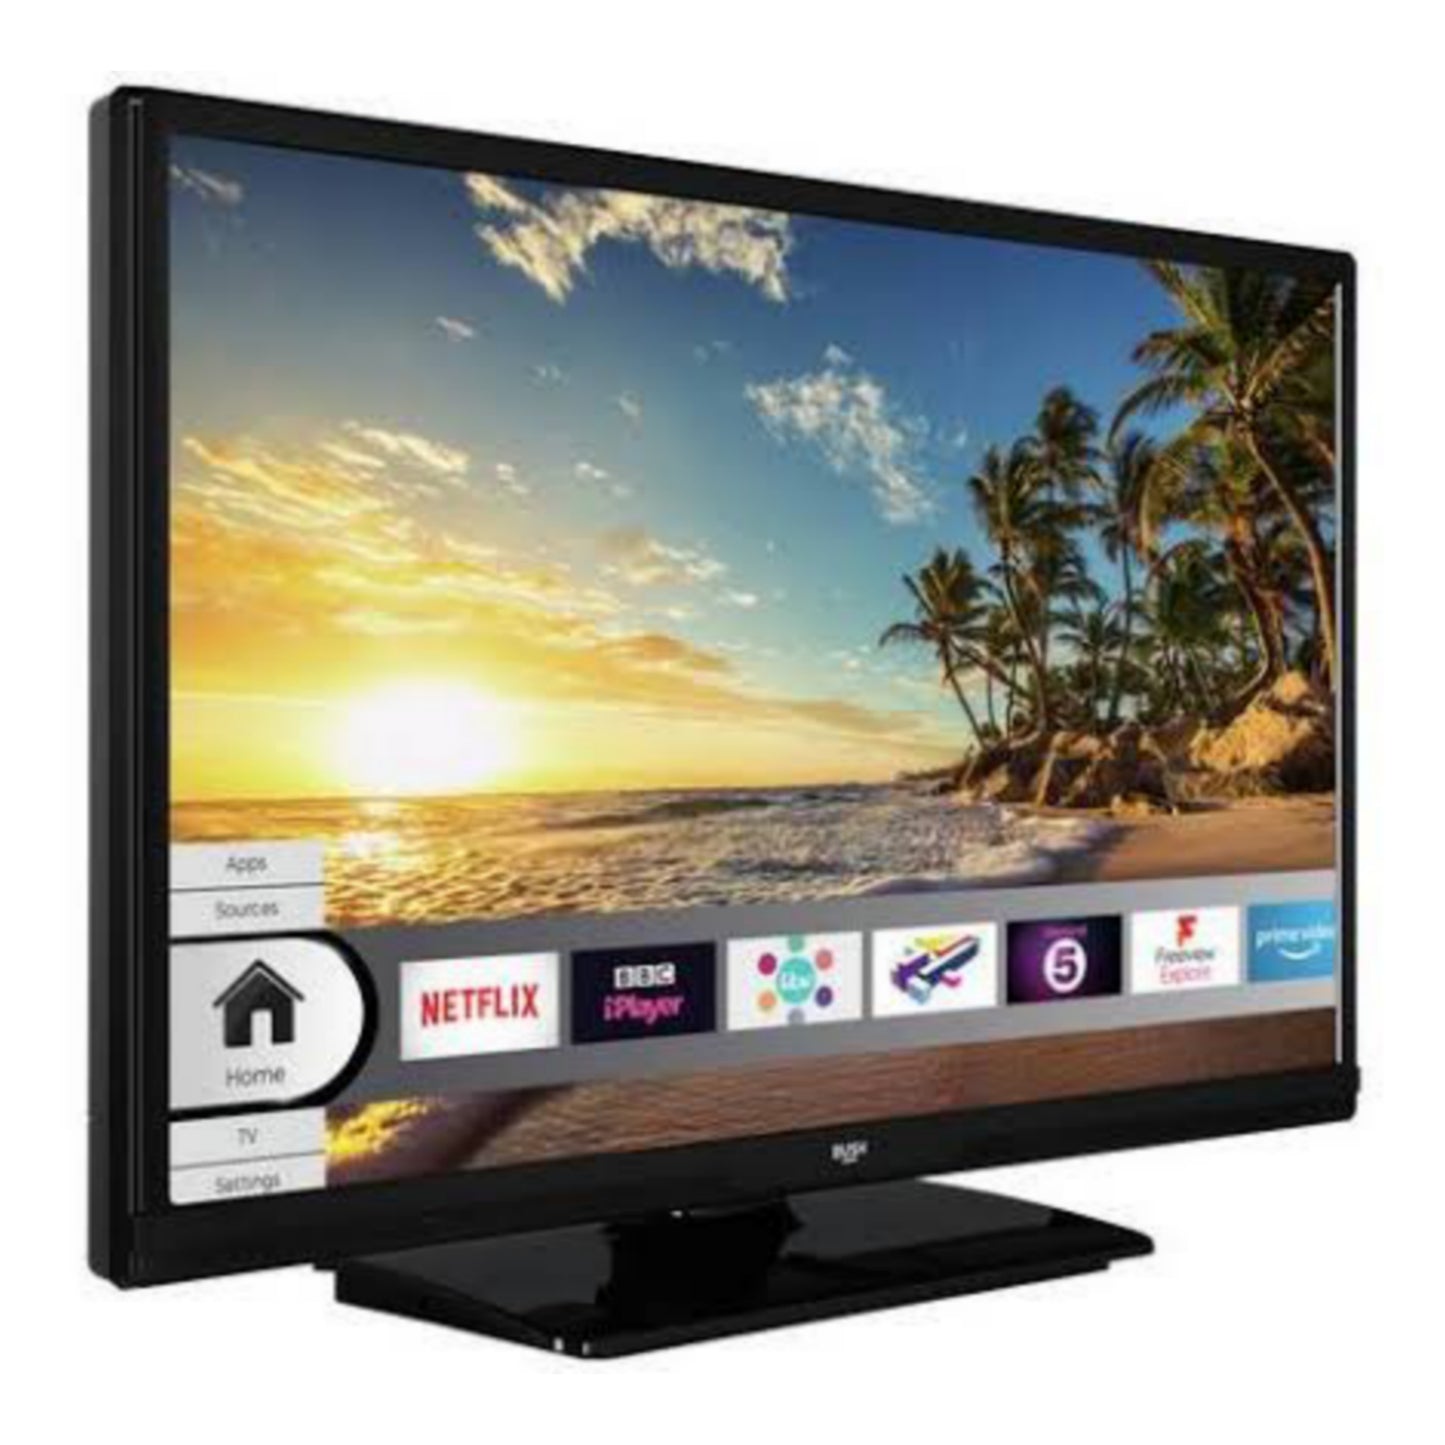 BUSH 24 Inch ELED24HDS Smart Full HD LED TV + Built-in WiFi, Screen Mirroring - UK Used